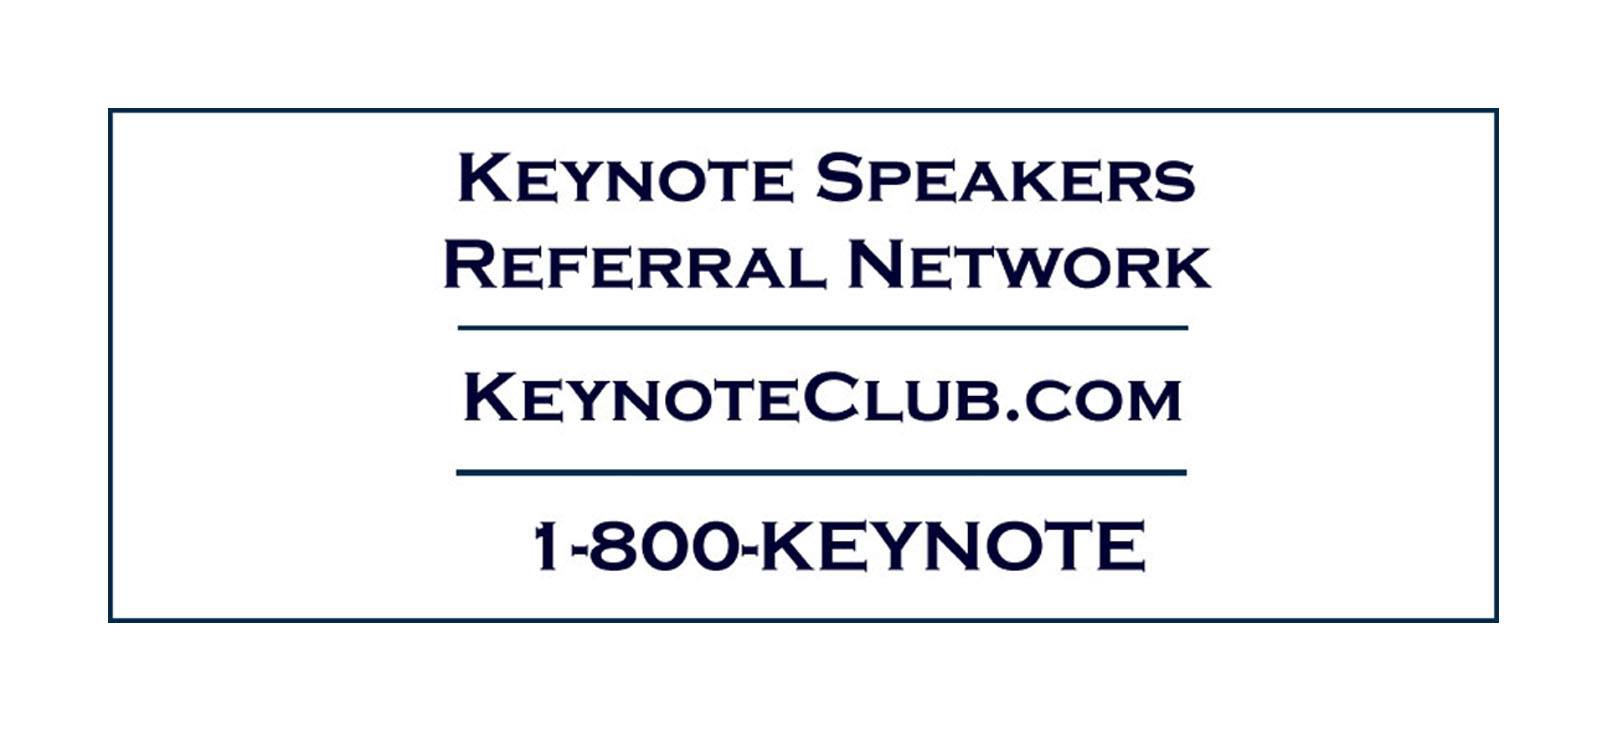 KeynoteClub.com -- A Facebook group for Int